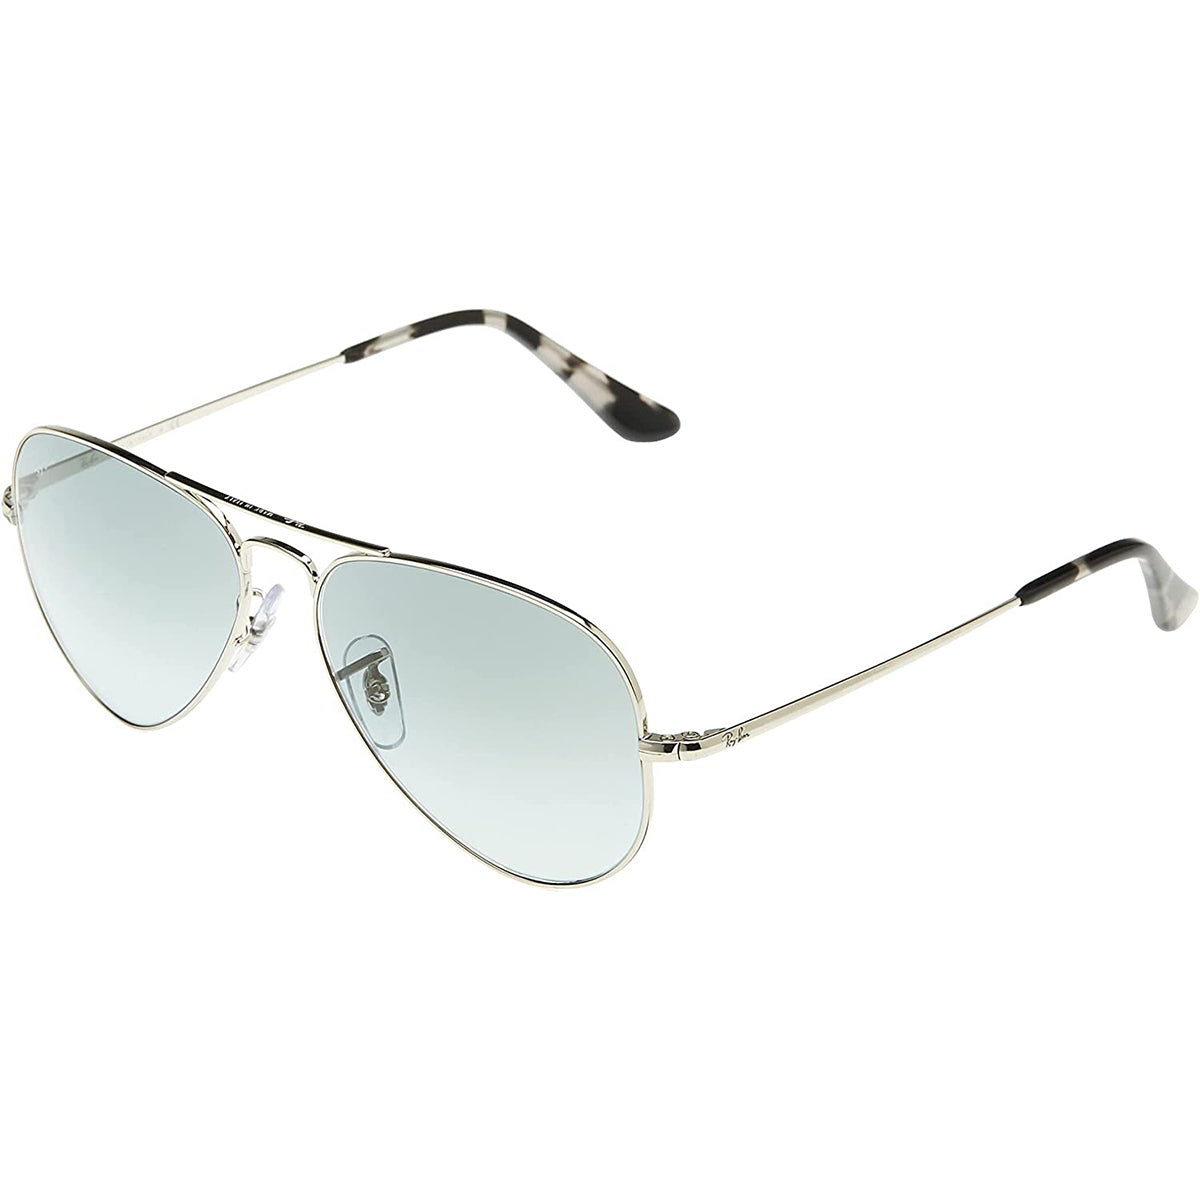 Ray-Ban Blaze Aviator Sunglasses with Grey Lenses in Matte Black